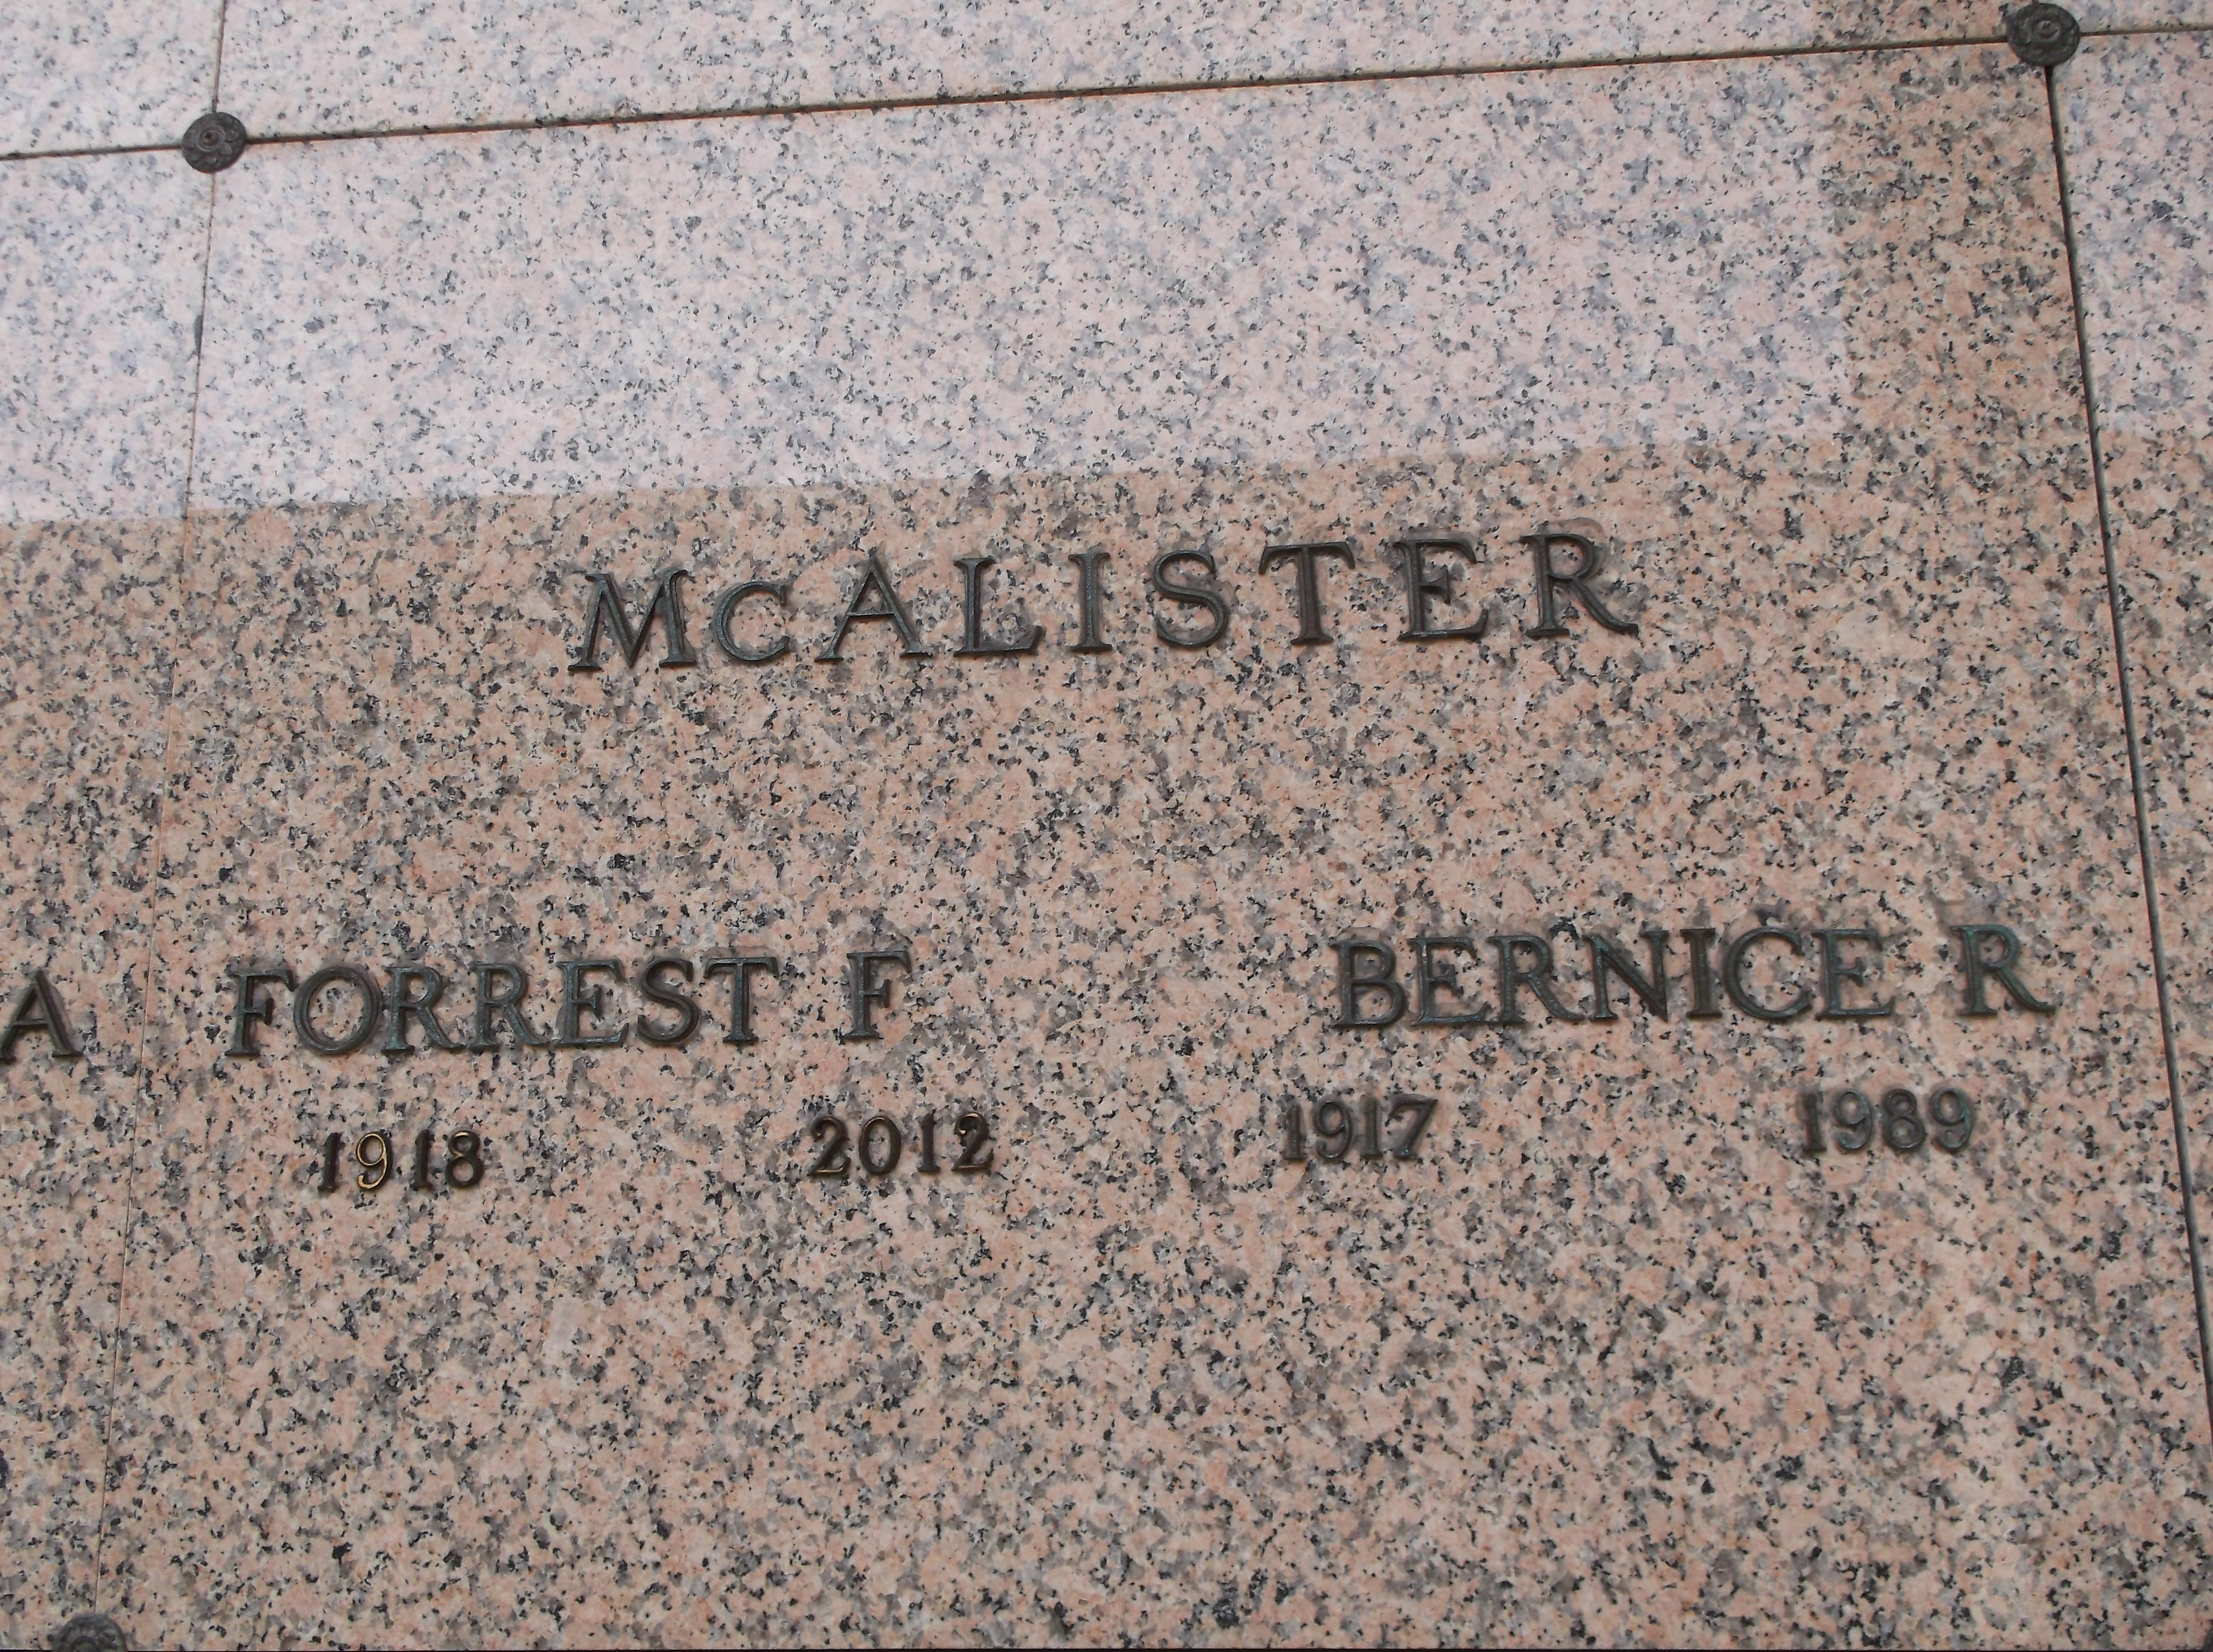 Forrest F McAlister